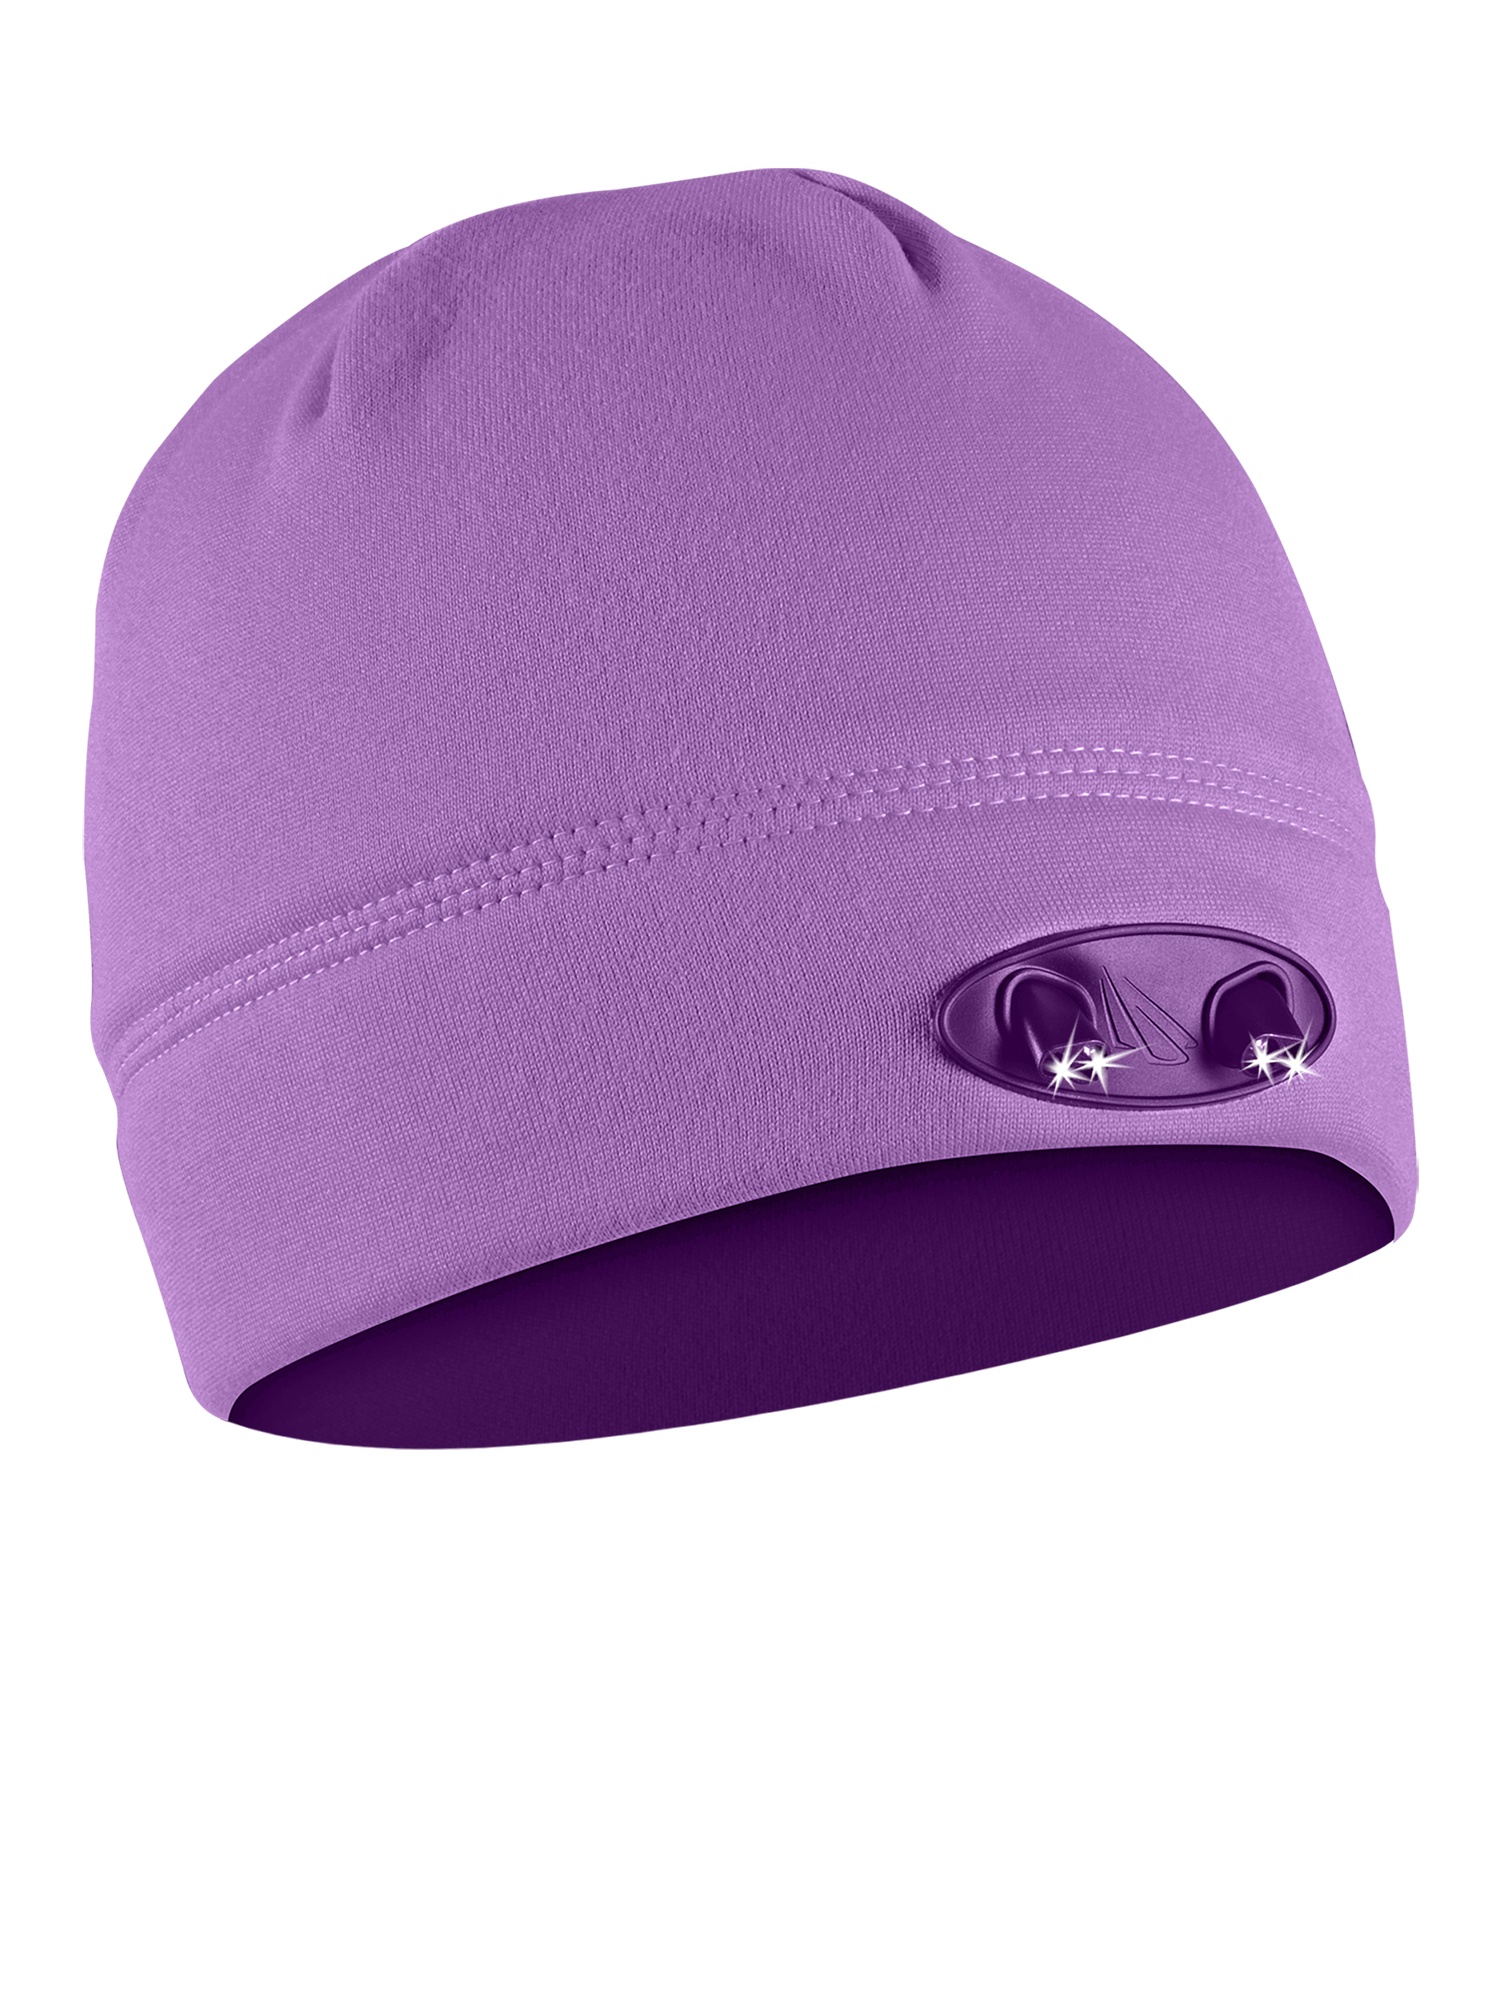 Powercap 3555 Compression Fleece Beanie Hat with LED lights, Purple 